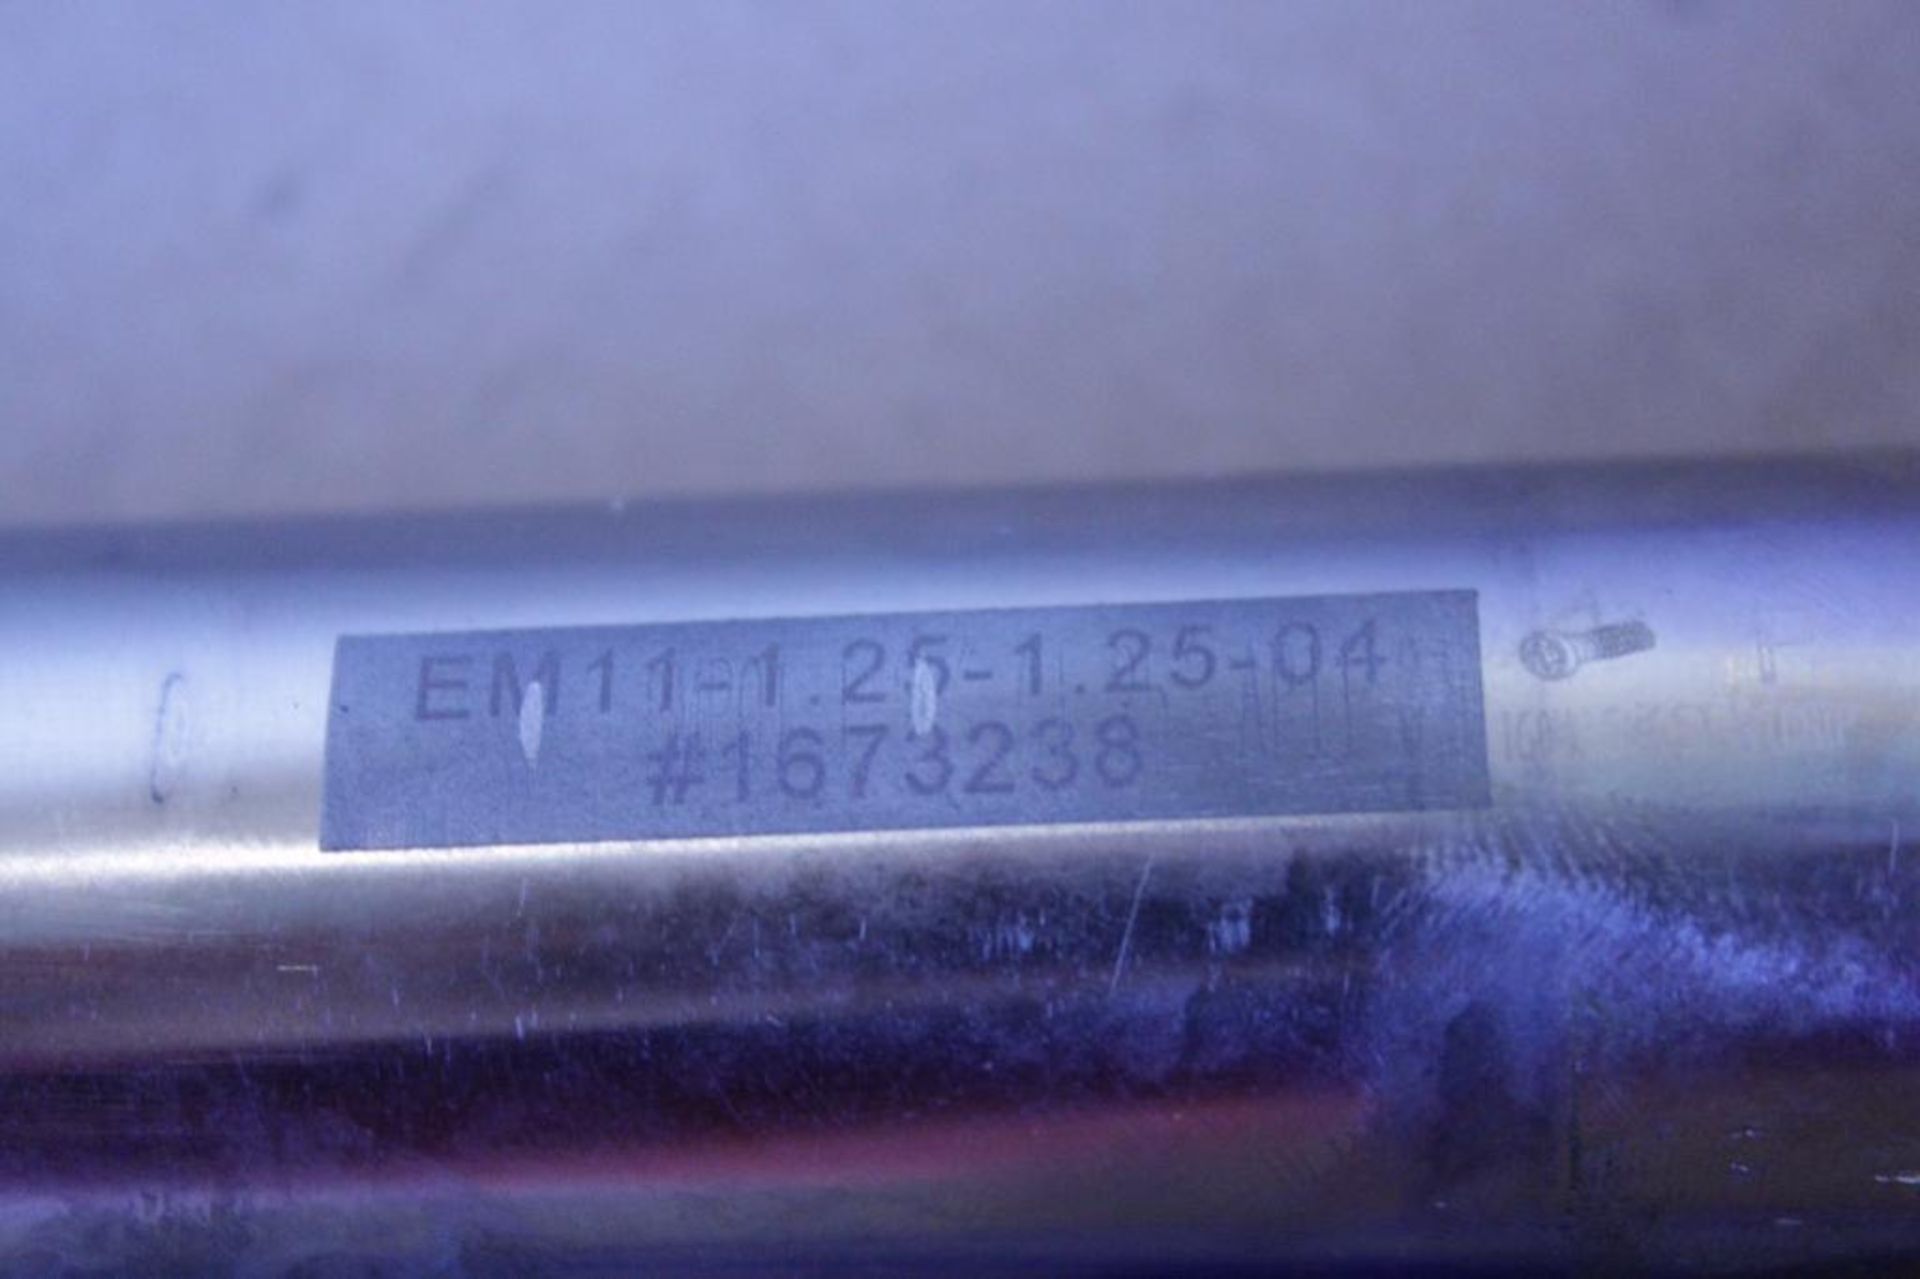 Nexus Tool EM11-1.25-1.25-04 carbide insert end mill 1.25" shank - Image 4 of 6